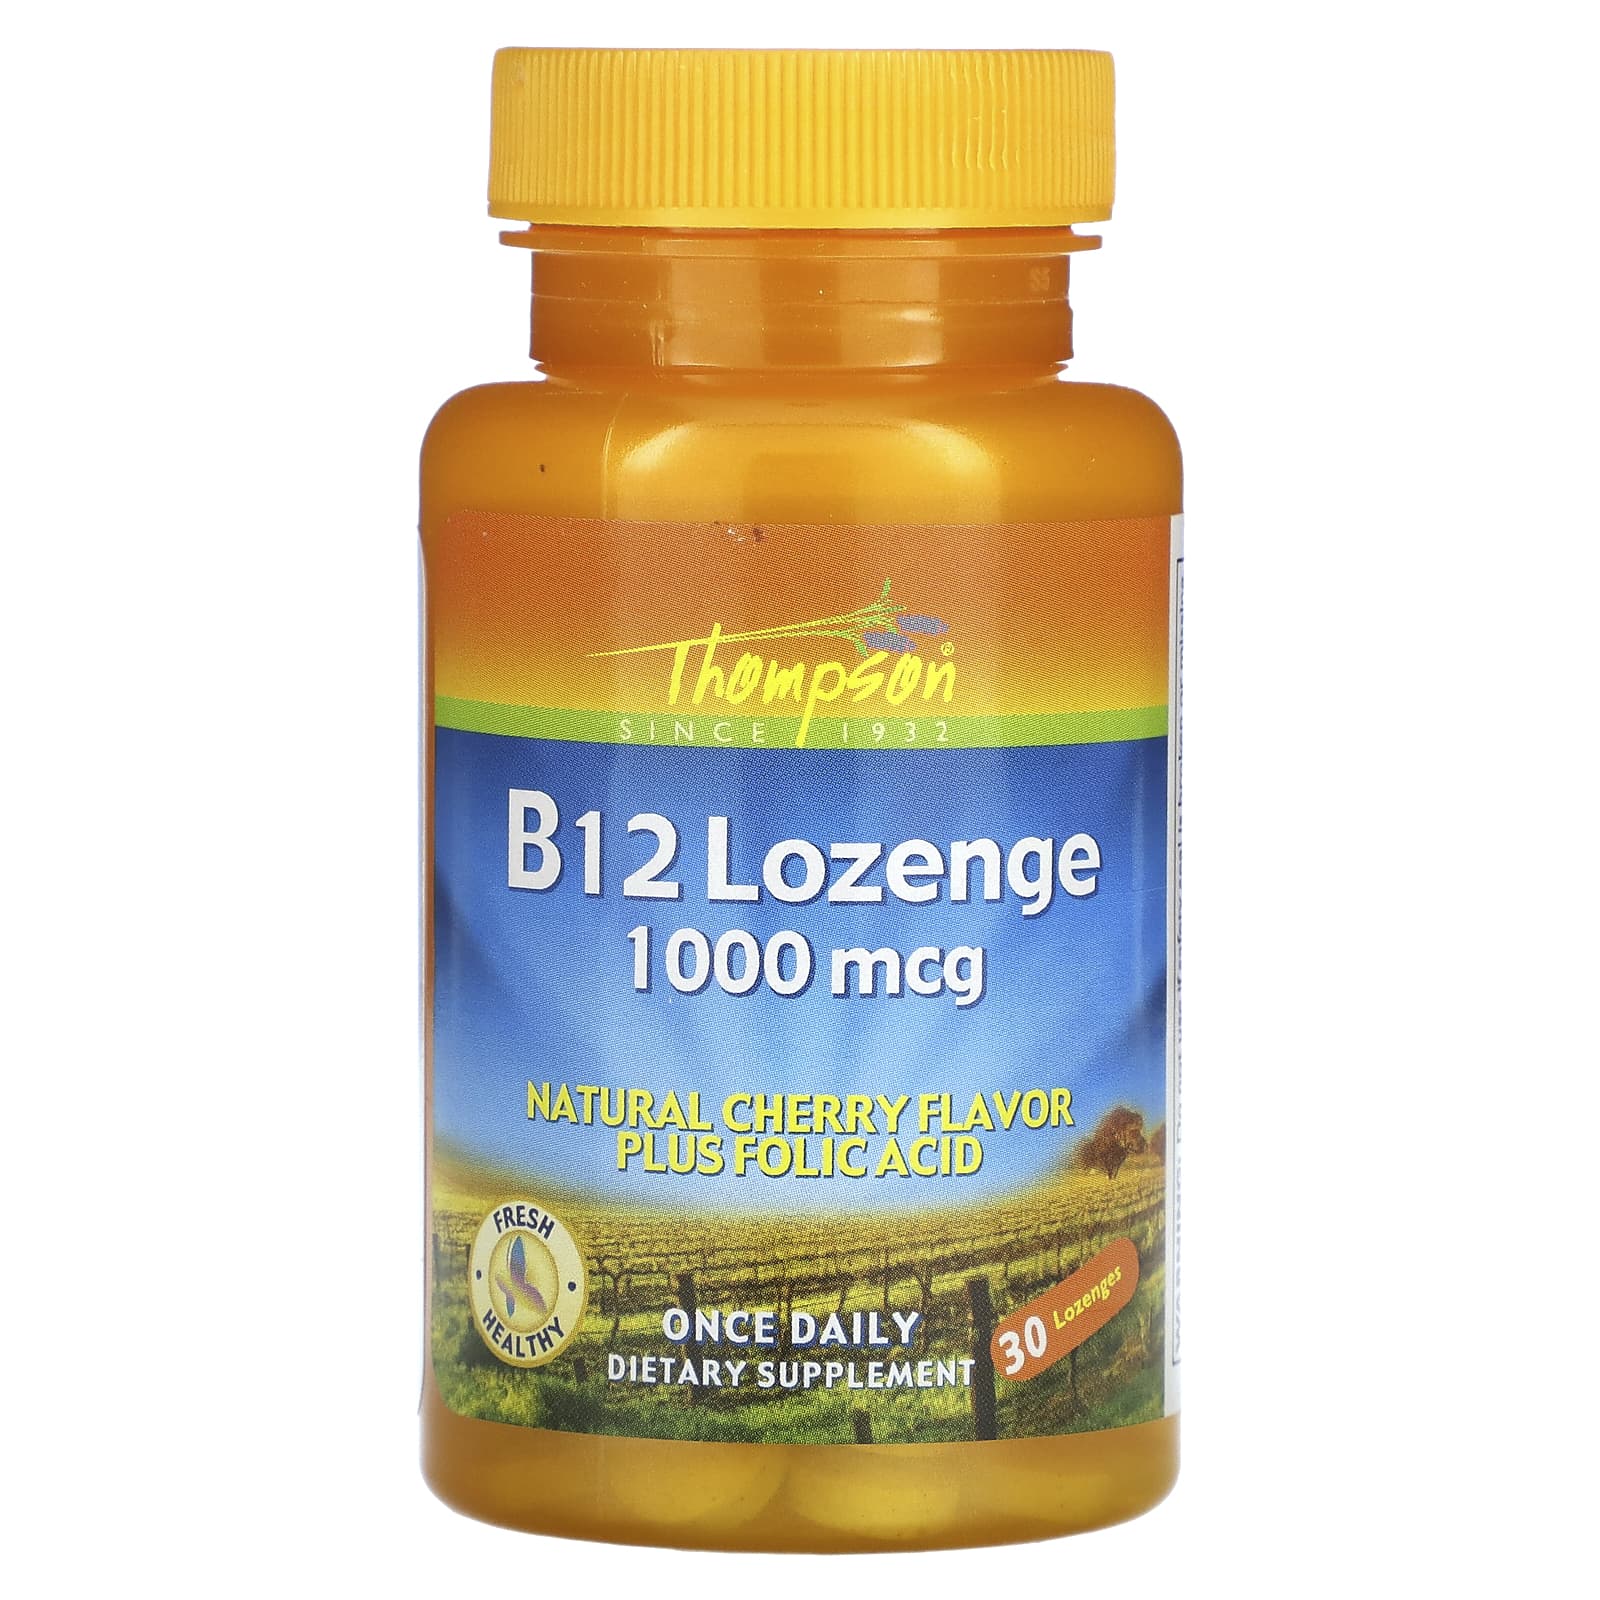 Thompson B12 таблетки для рассасывания натуральный аромат вишни 1000 мкг 30 таблеток для рассасывания